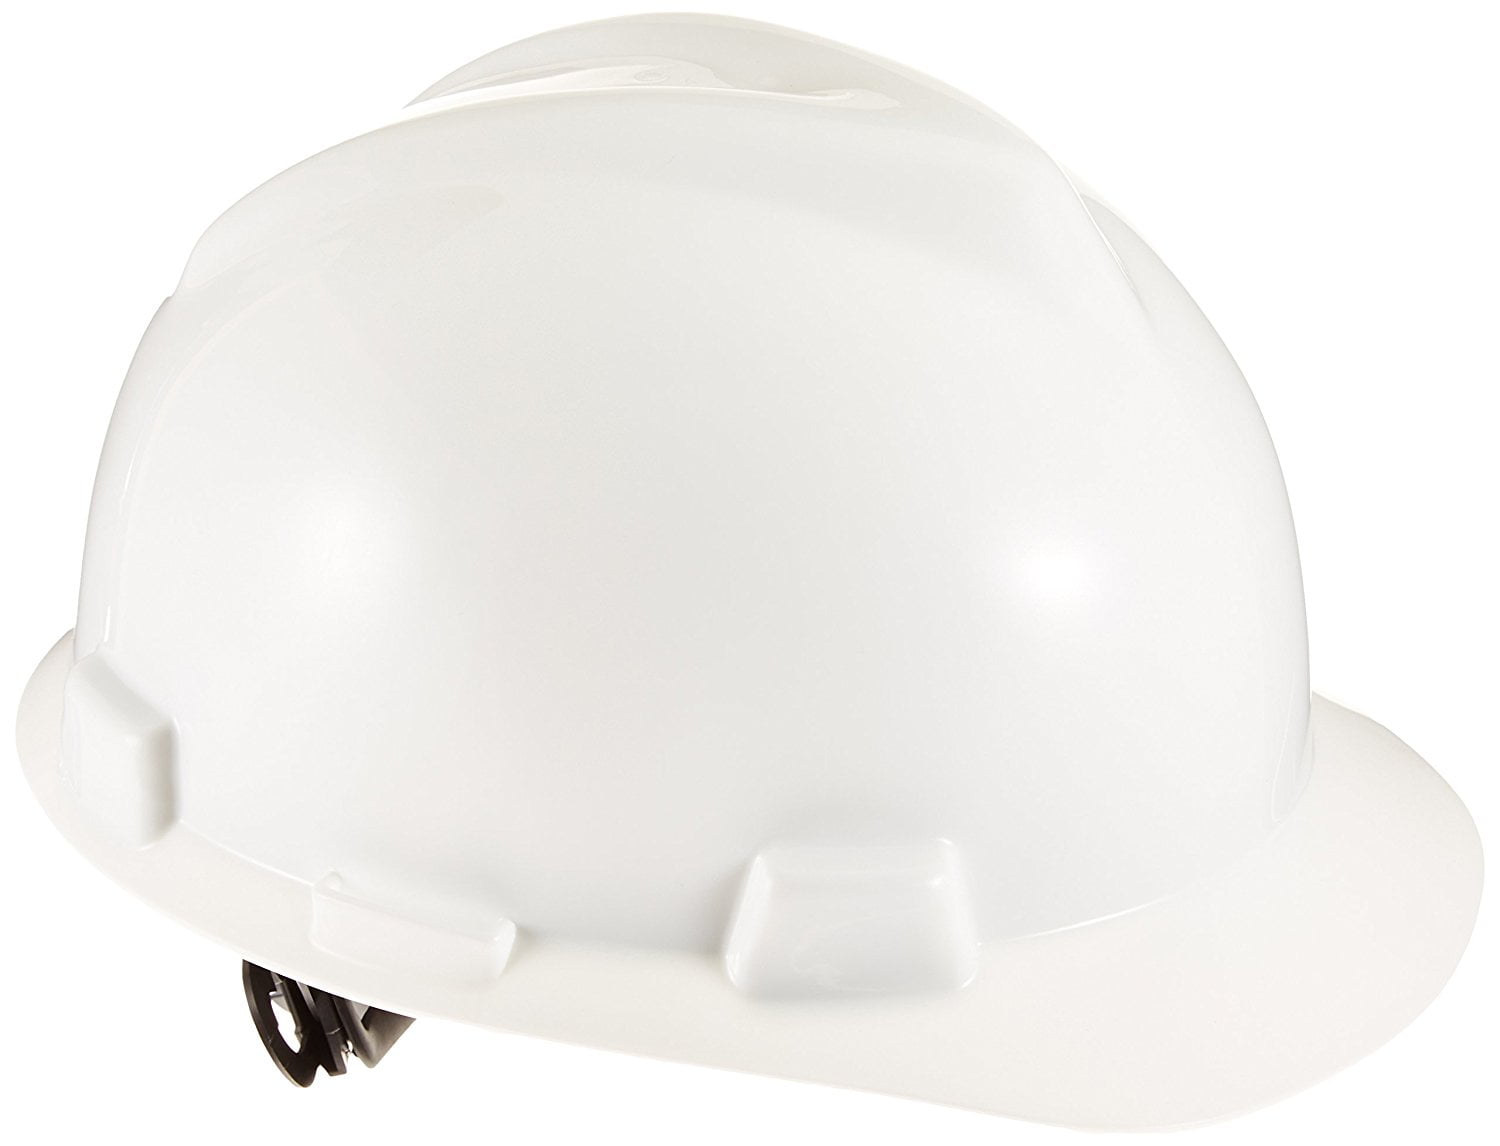 MSA 475358 V-Gard Cap and Hats Polyethylene White Standard Size 5.62 Height x 11 Length x 8.5 Width